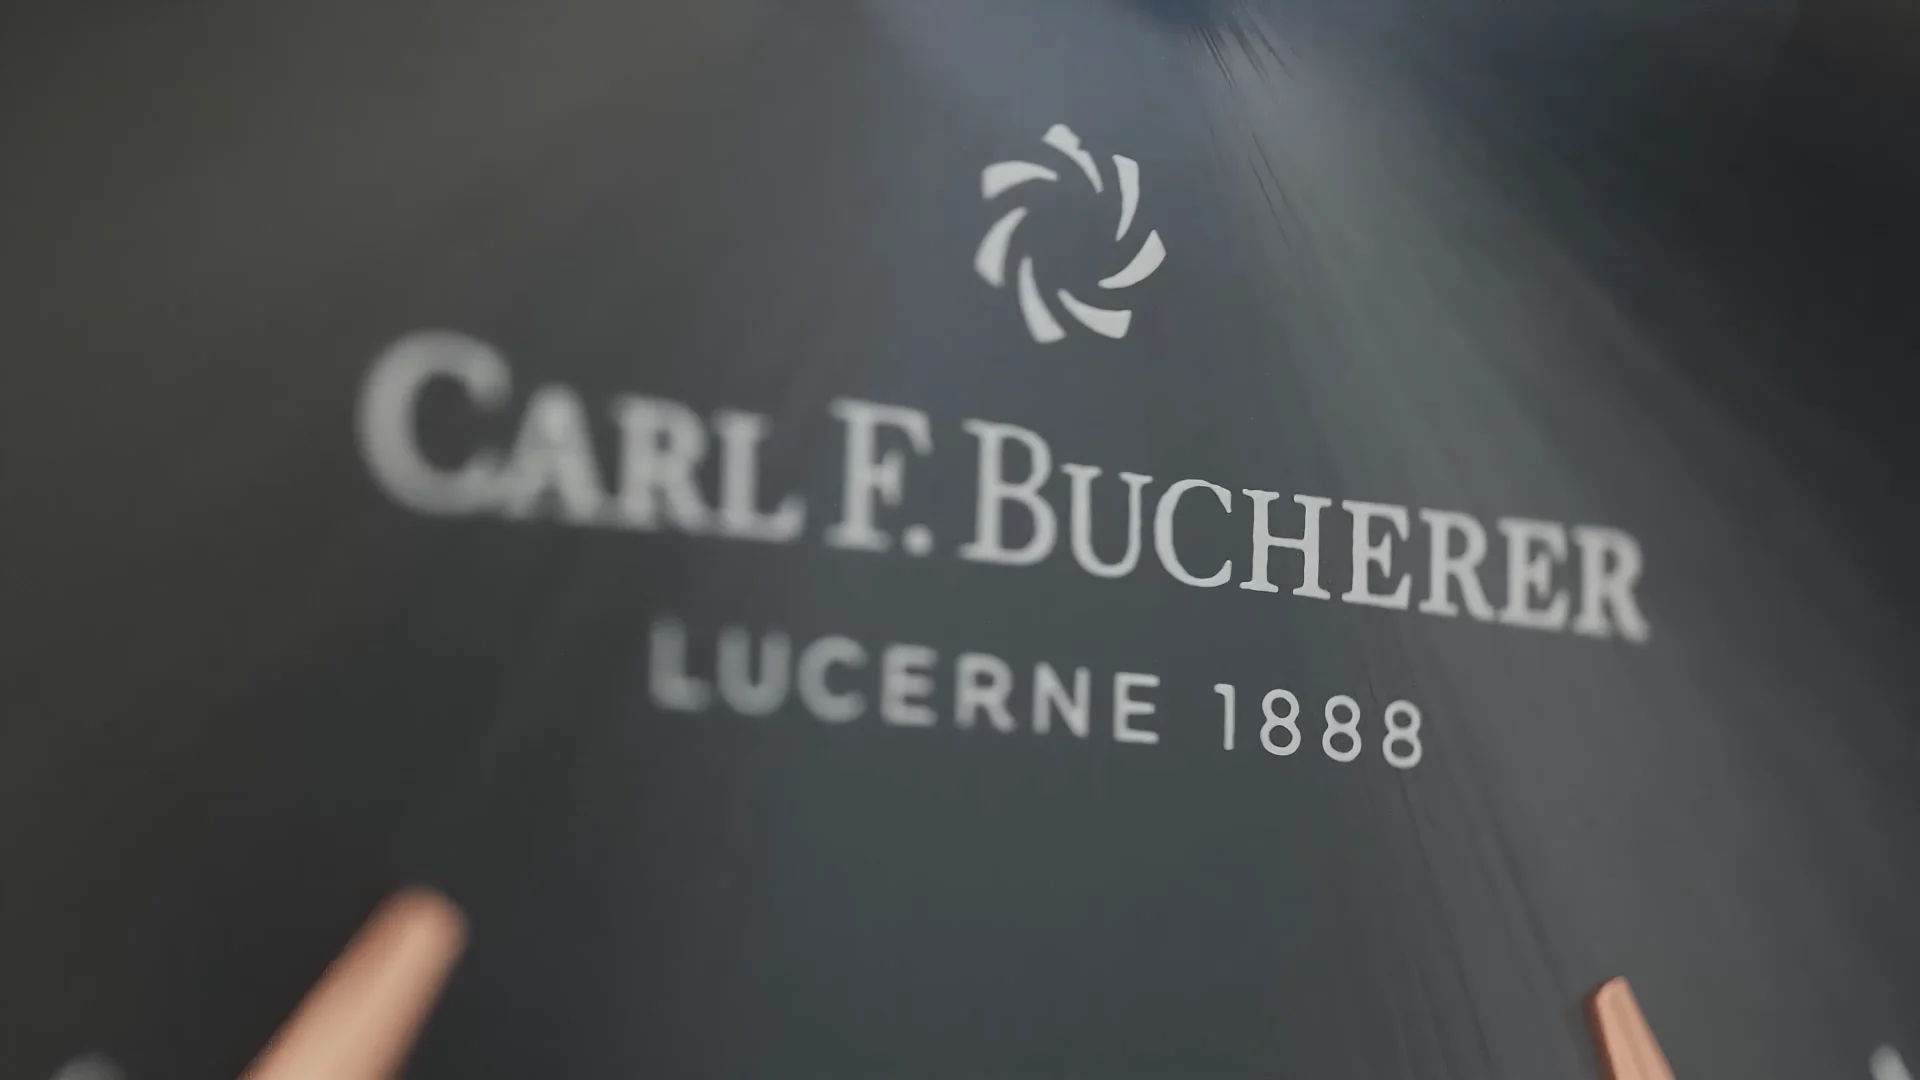 we see the lettering Carl F Bucherer, Lucerne 1888 on a black background